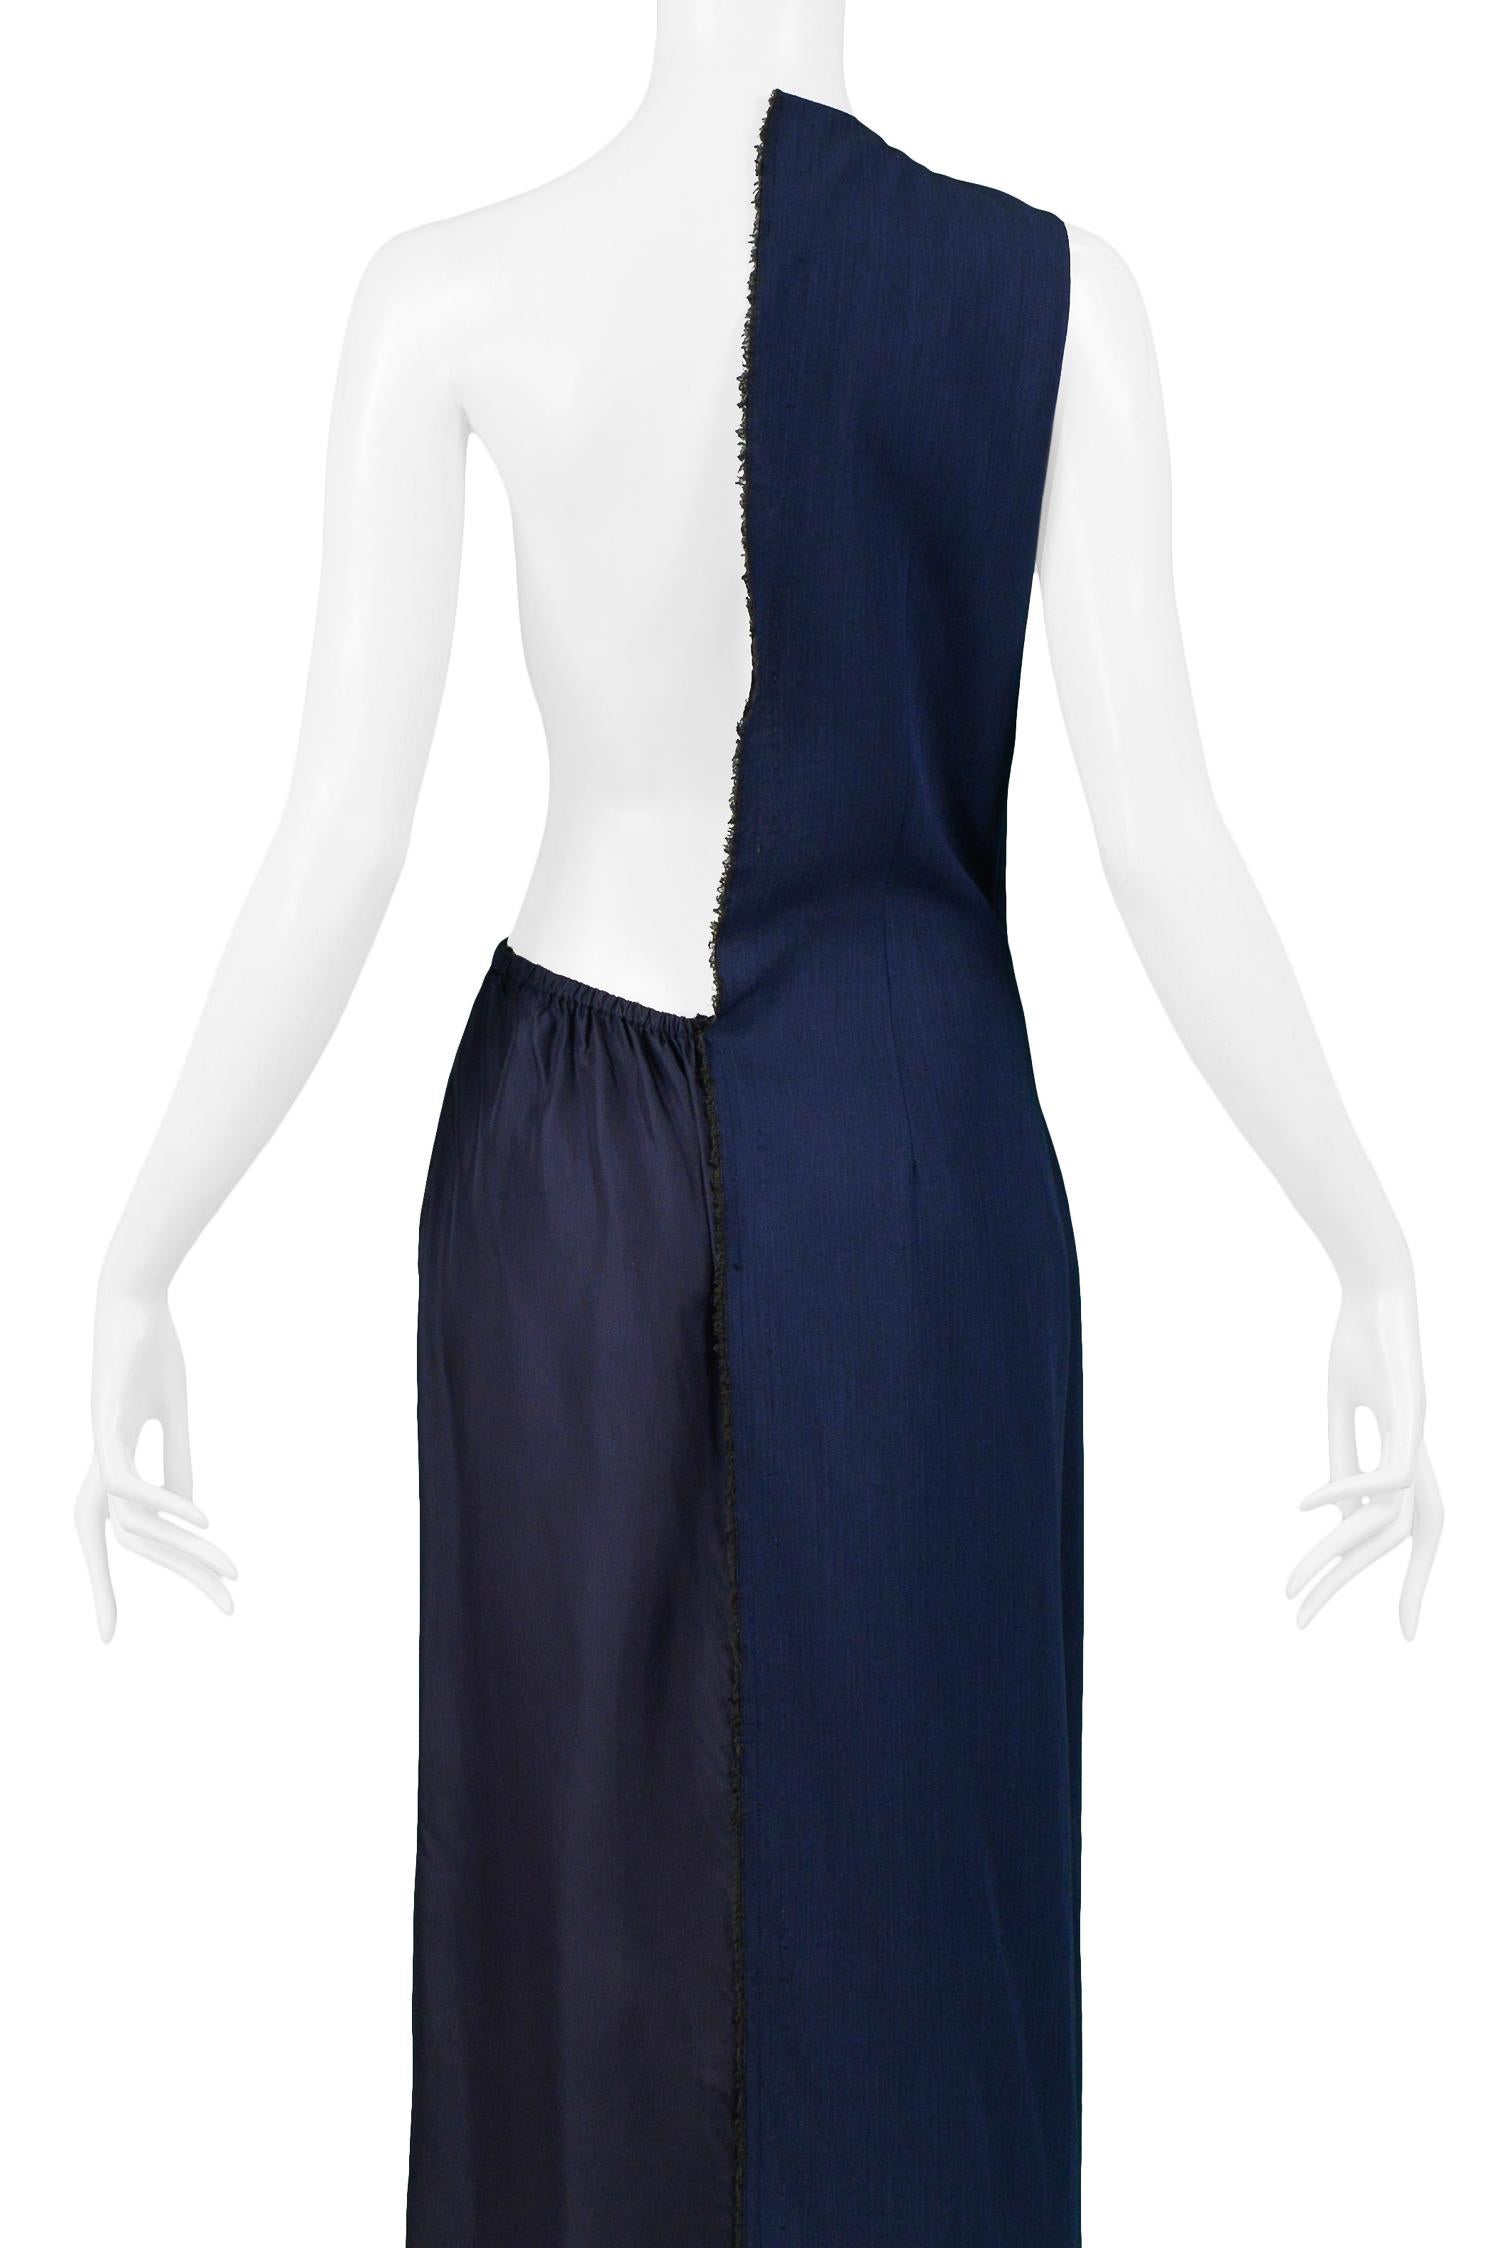 Maison Martin Margiela Blue Asymmetrical Avant Garde Maxi Apron Dress 1